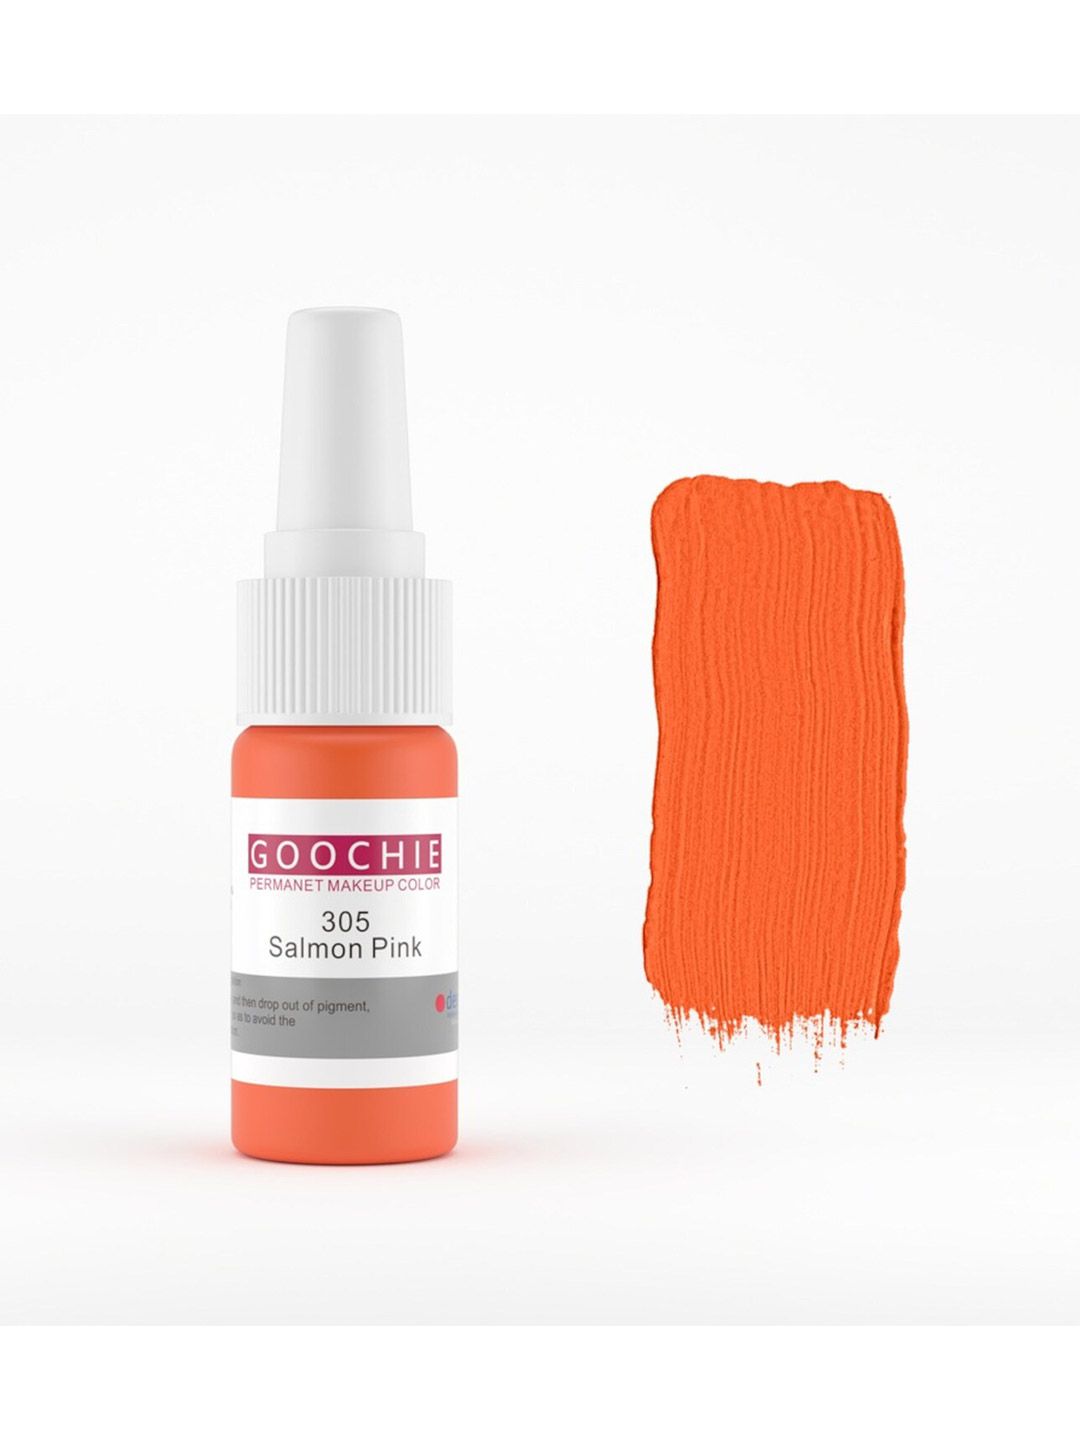 GOOCHIE Permanent Micro-Pigment Lip Tint 15 ml - Salmon Pink 305 Price in India